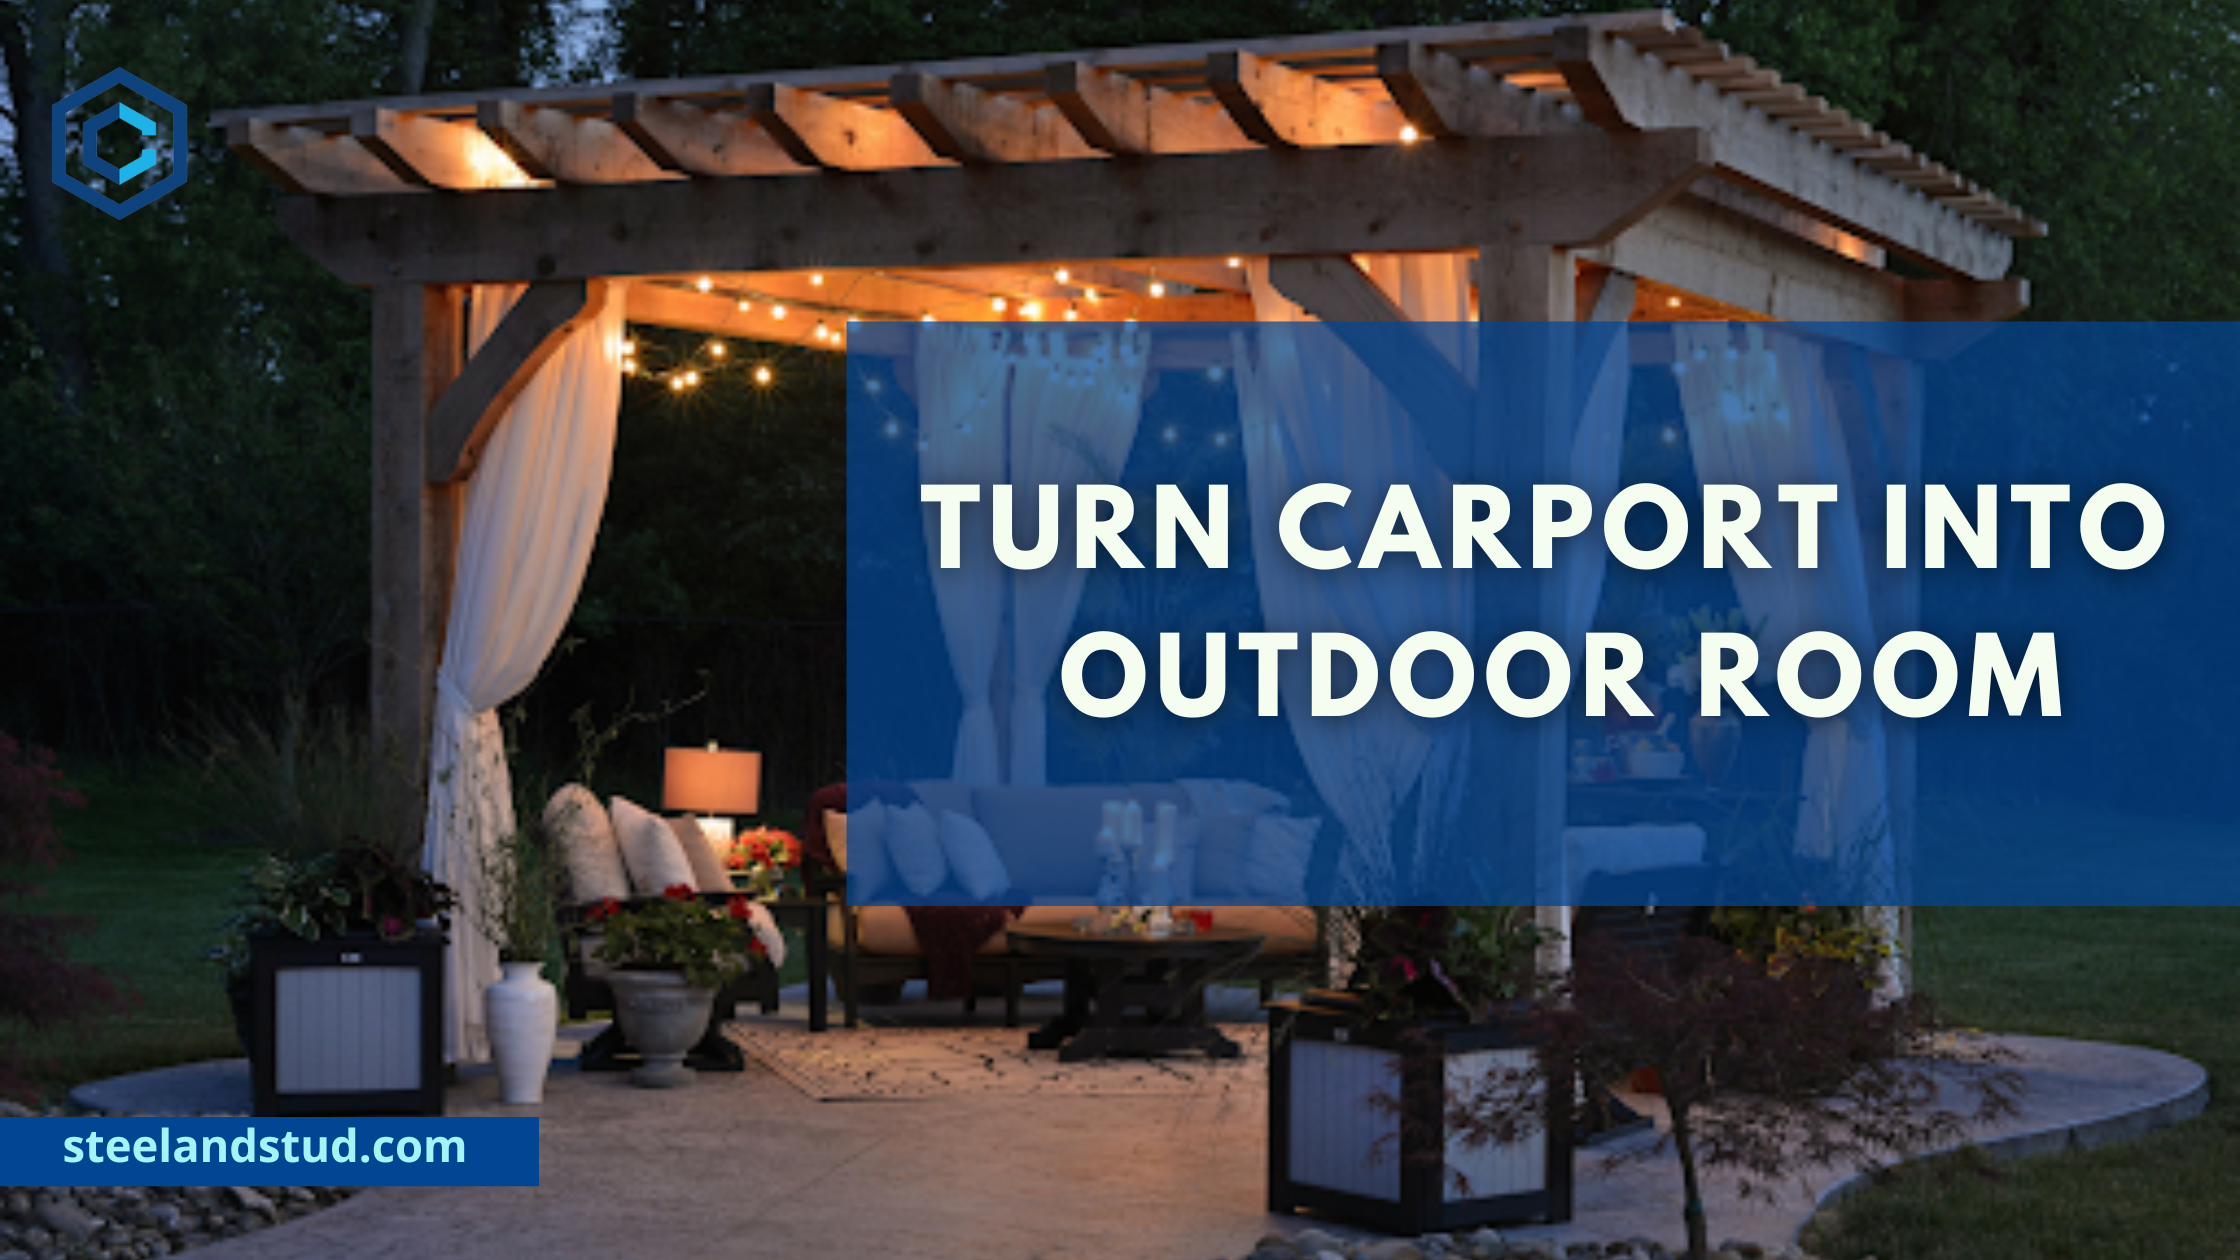 Turn carport into outdoor room